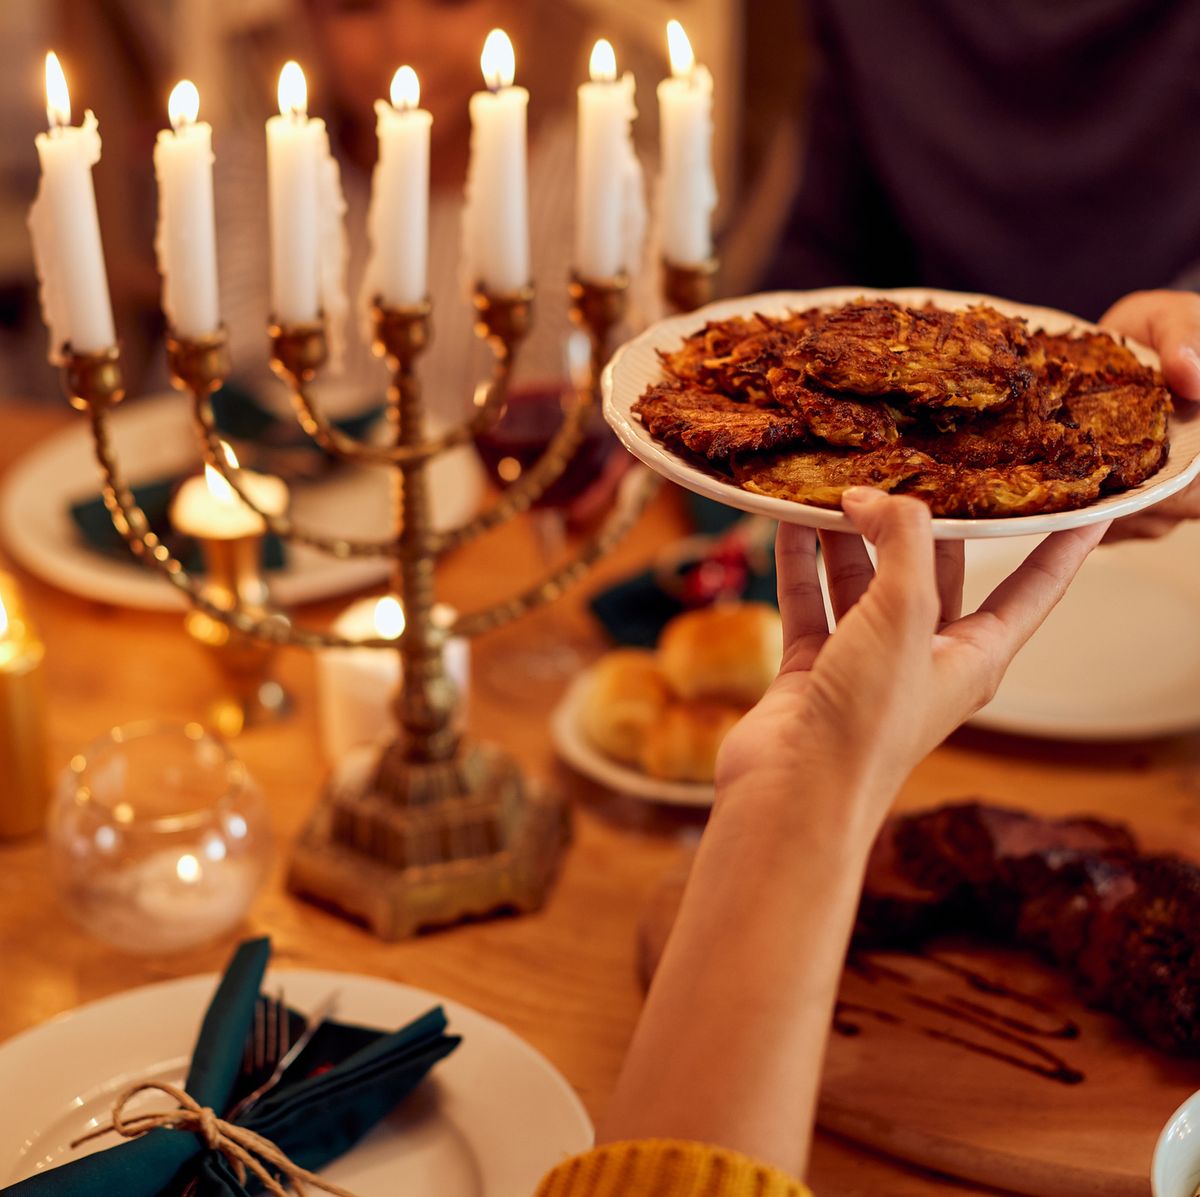 When Is Hanukkah In 2022? - When Is The First Night Of Hanukkah?